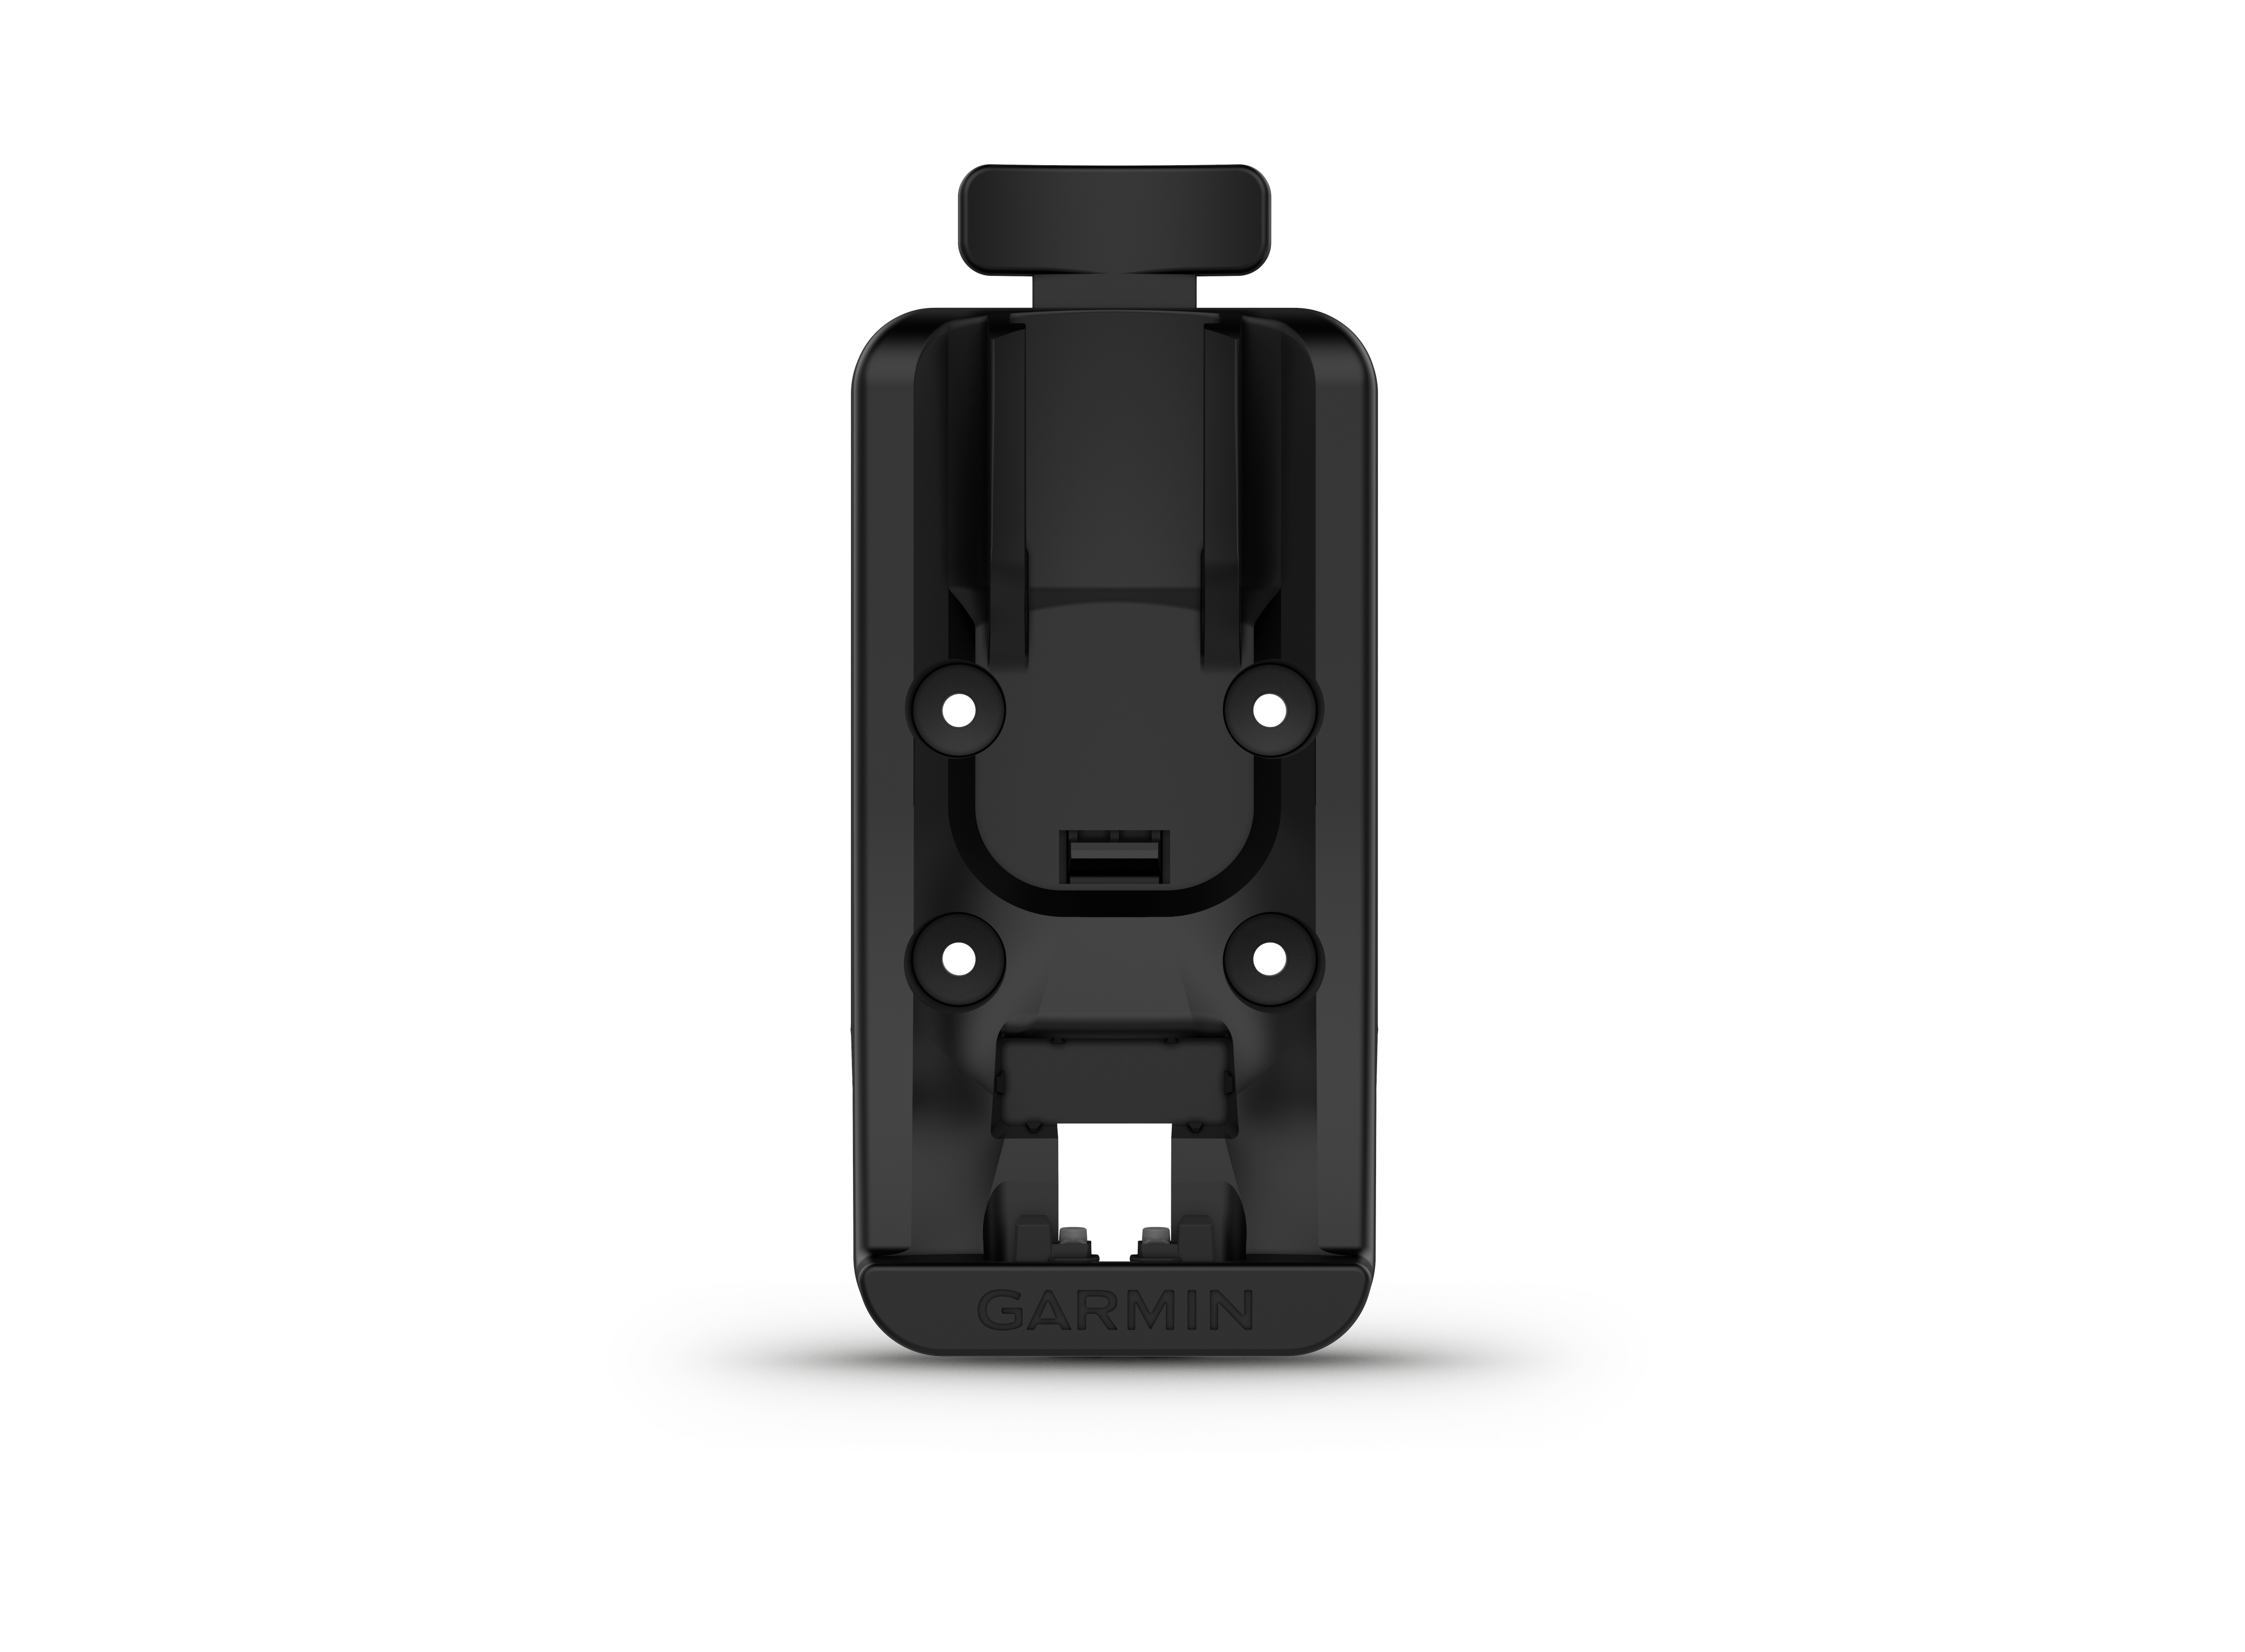 Garmin Holder with power supply (GPSMAP® 86)